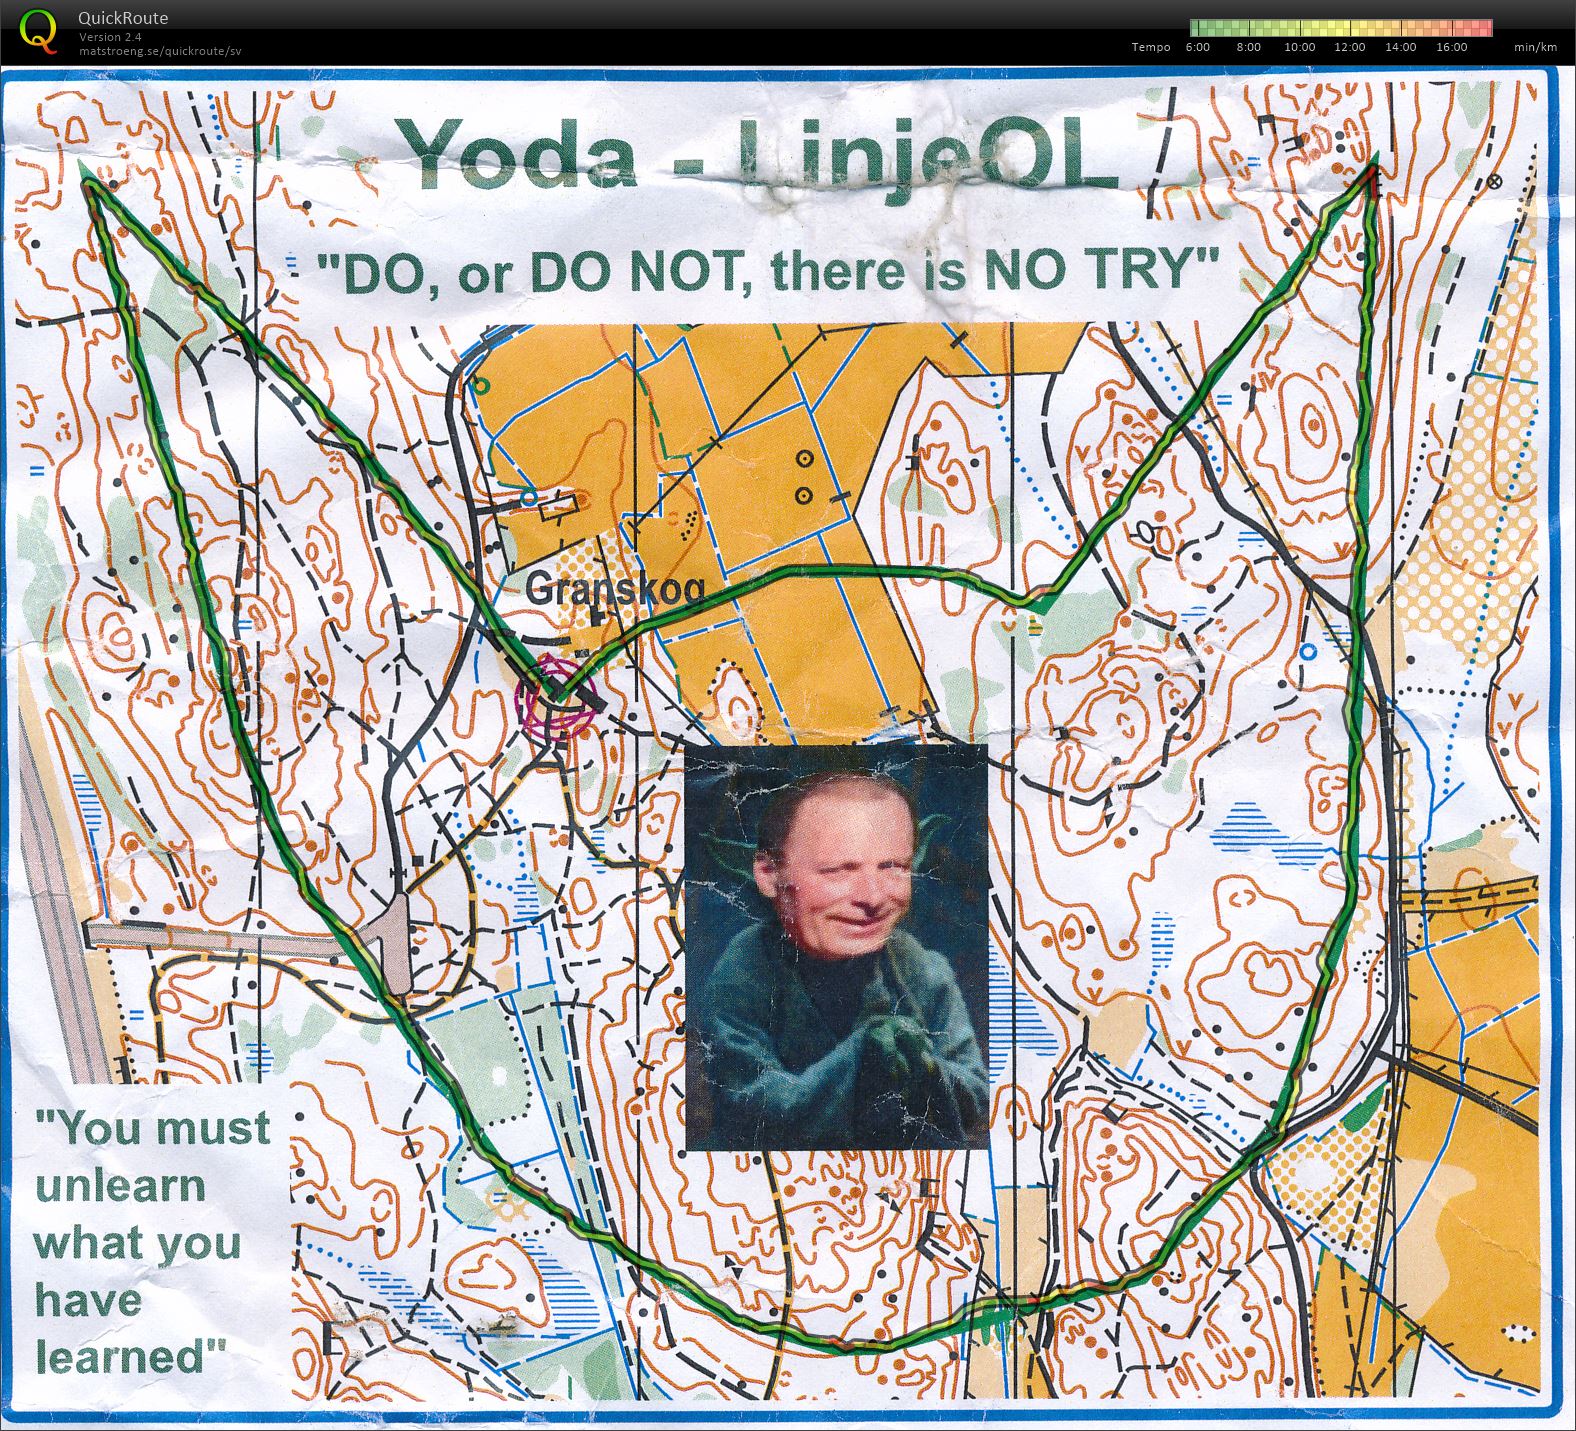 Yoda - linjeOL (2016-06-18)